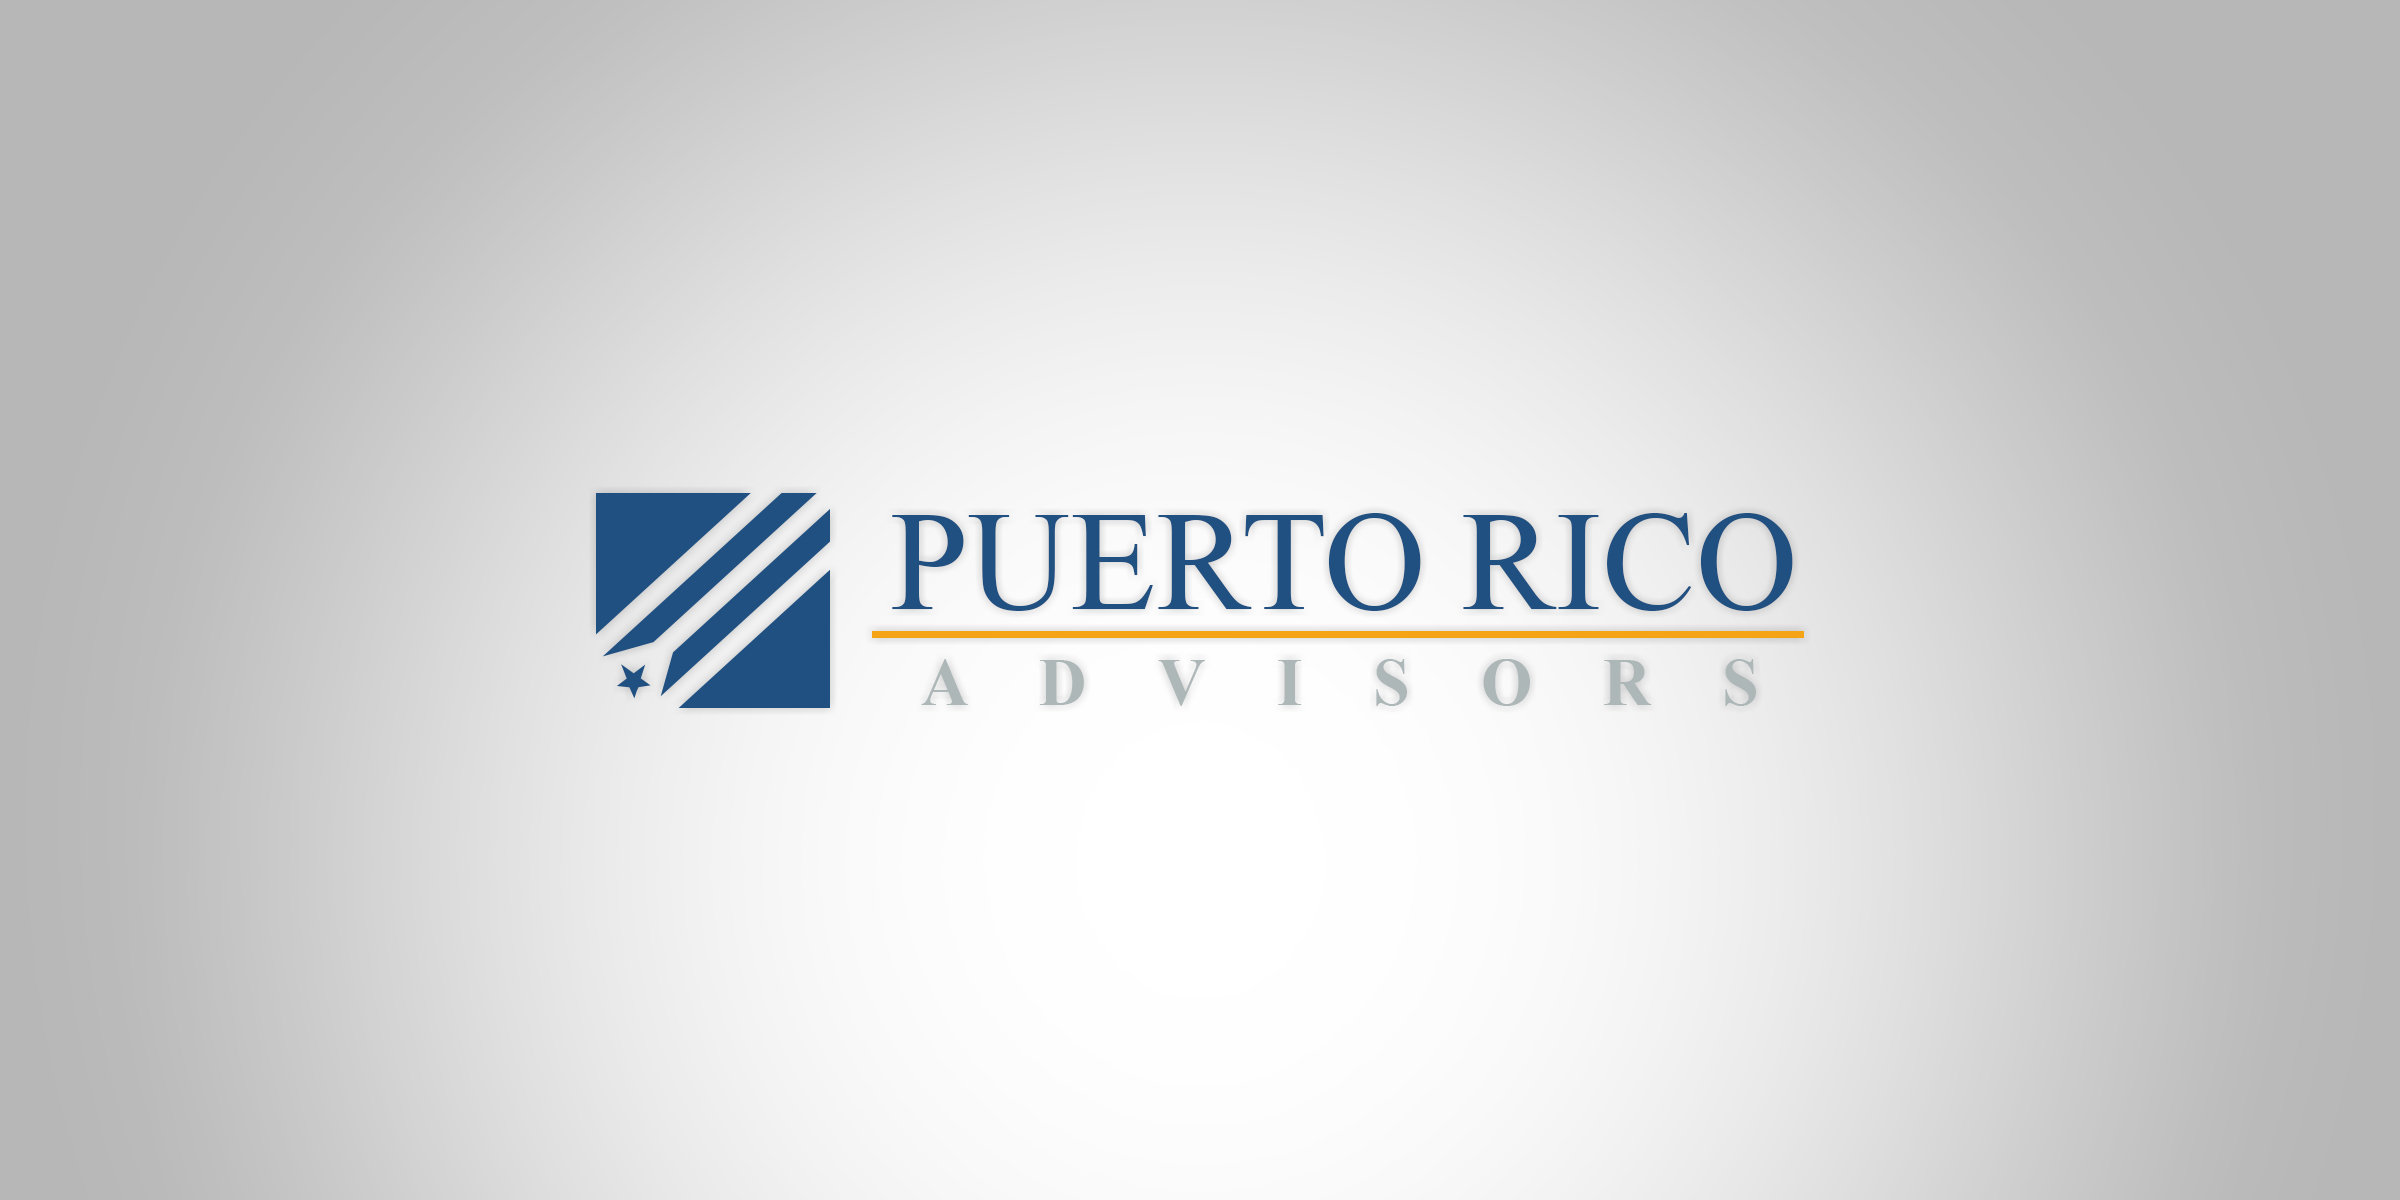 Puerto Rico Advisors